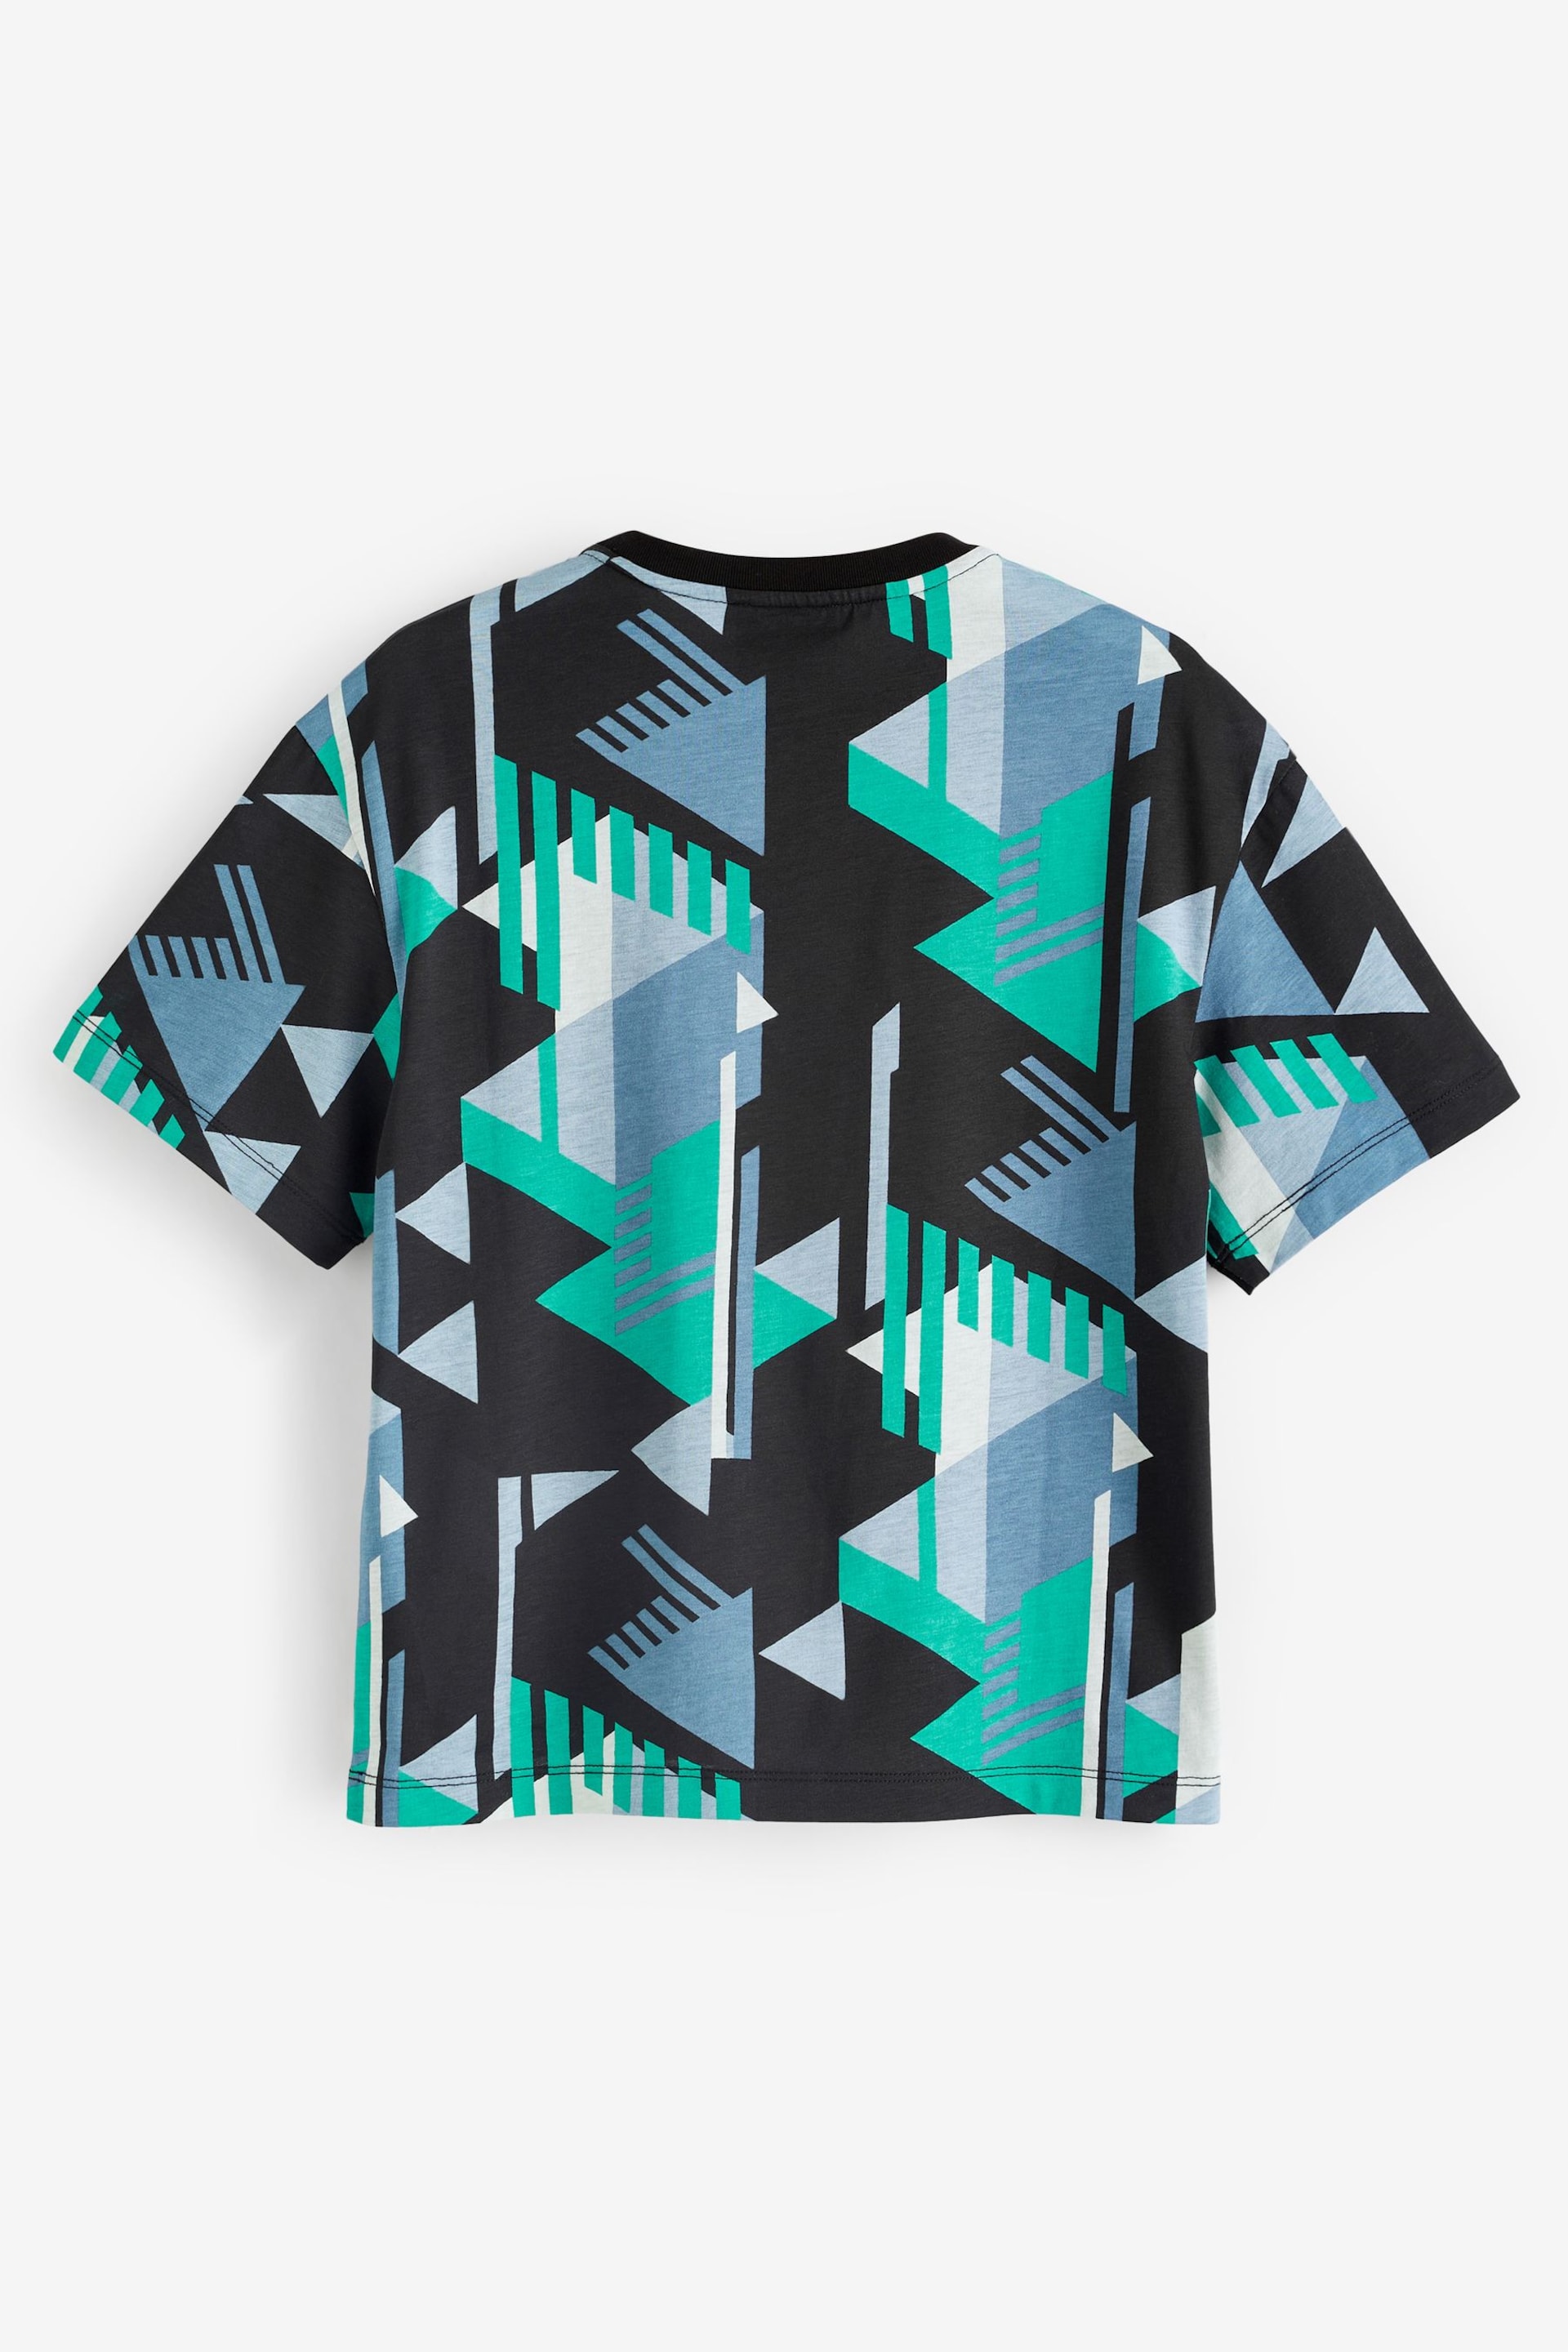 Emporio Armani EA7 Boys Geometric Graphic T-Shirt - Image 2 of 3